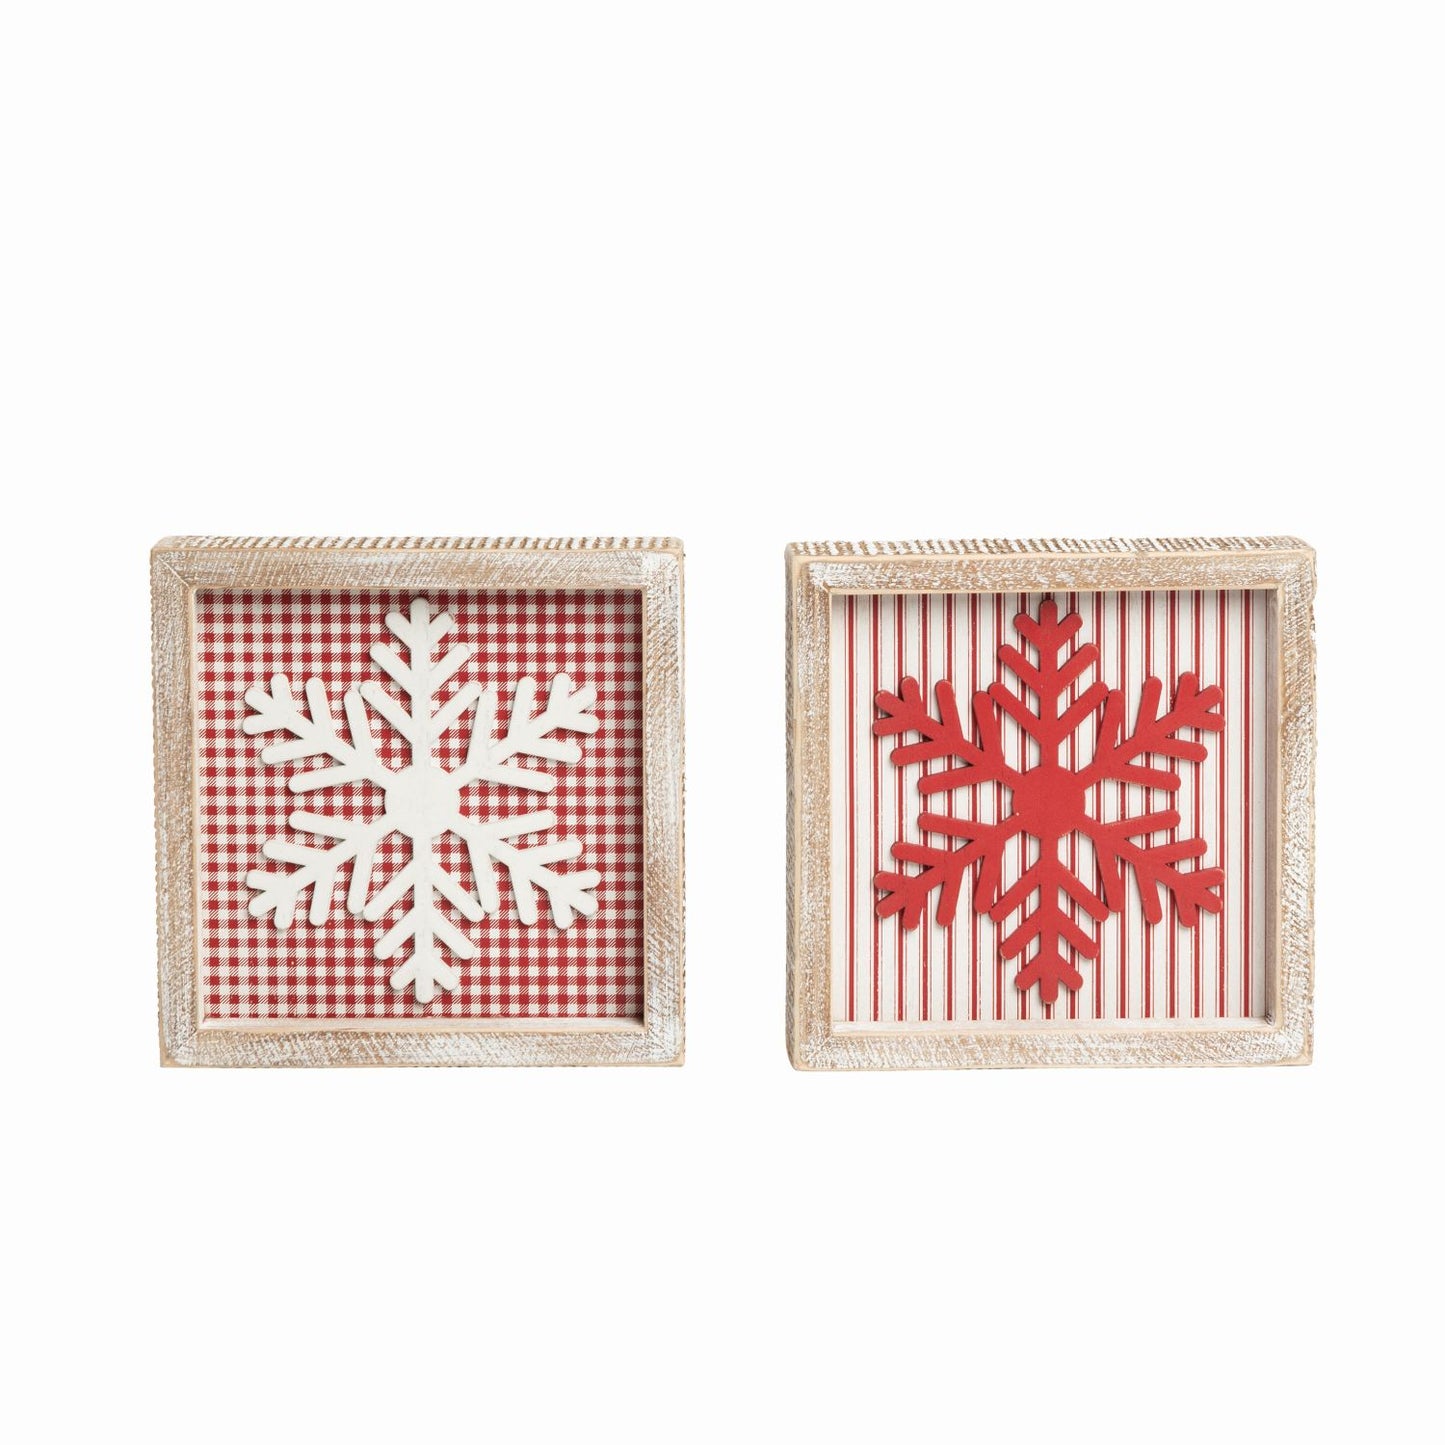 Transpac Wood Dimensional Snowflake Decor, Set Of 2, Assortment